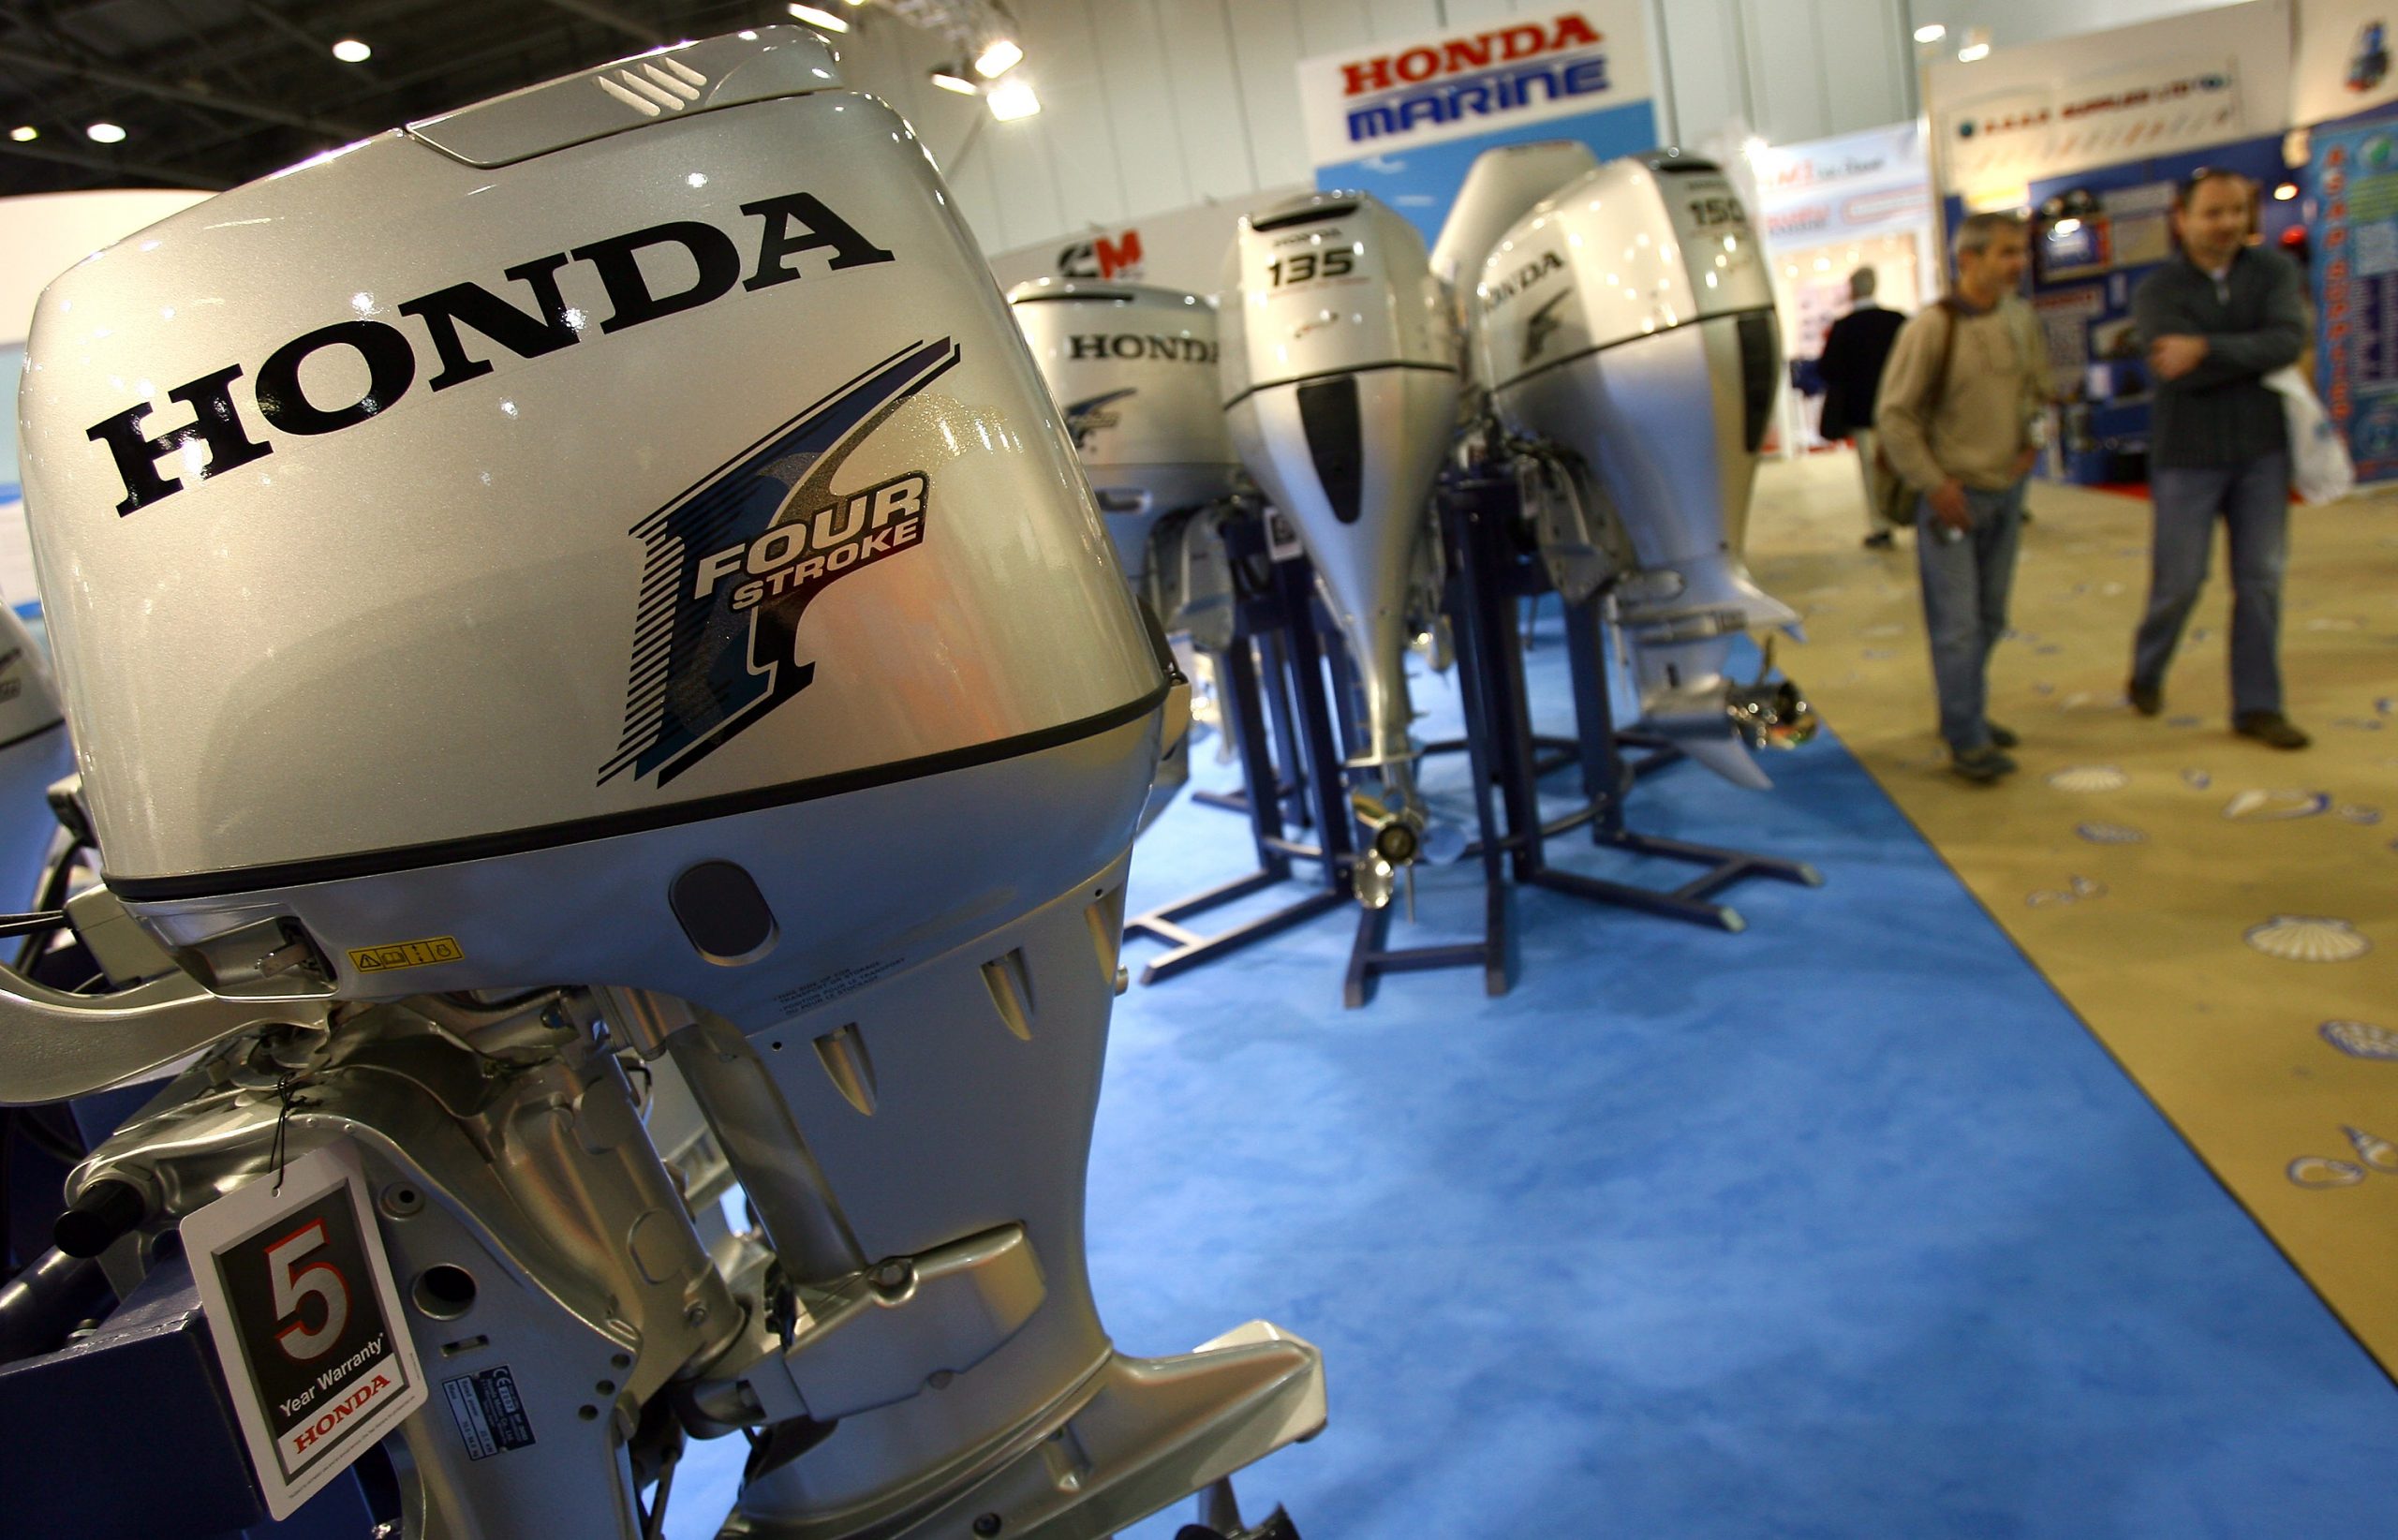 Honda outboard motors on display at a boat show